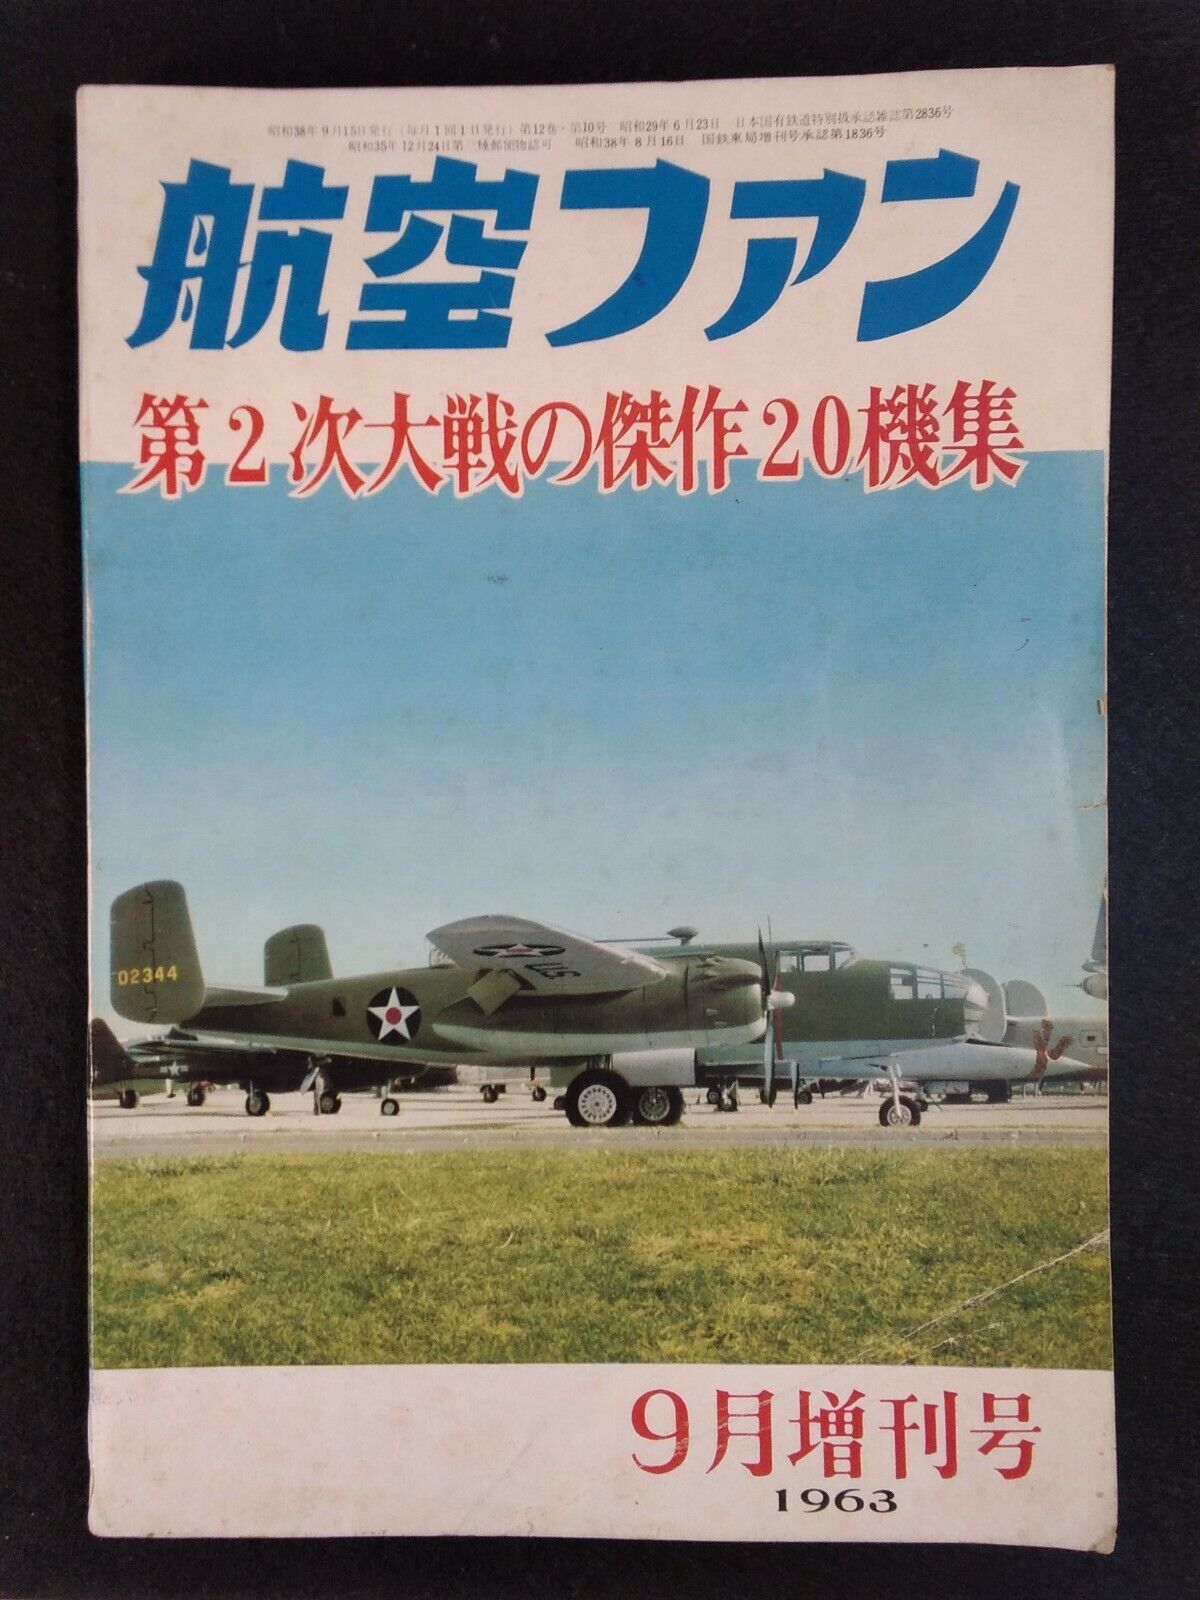 Airplane Magazine Japan The Koku Fan Rare VHTF Vtg 1963 Ads US Air Force RC Sept